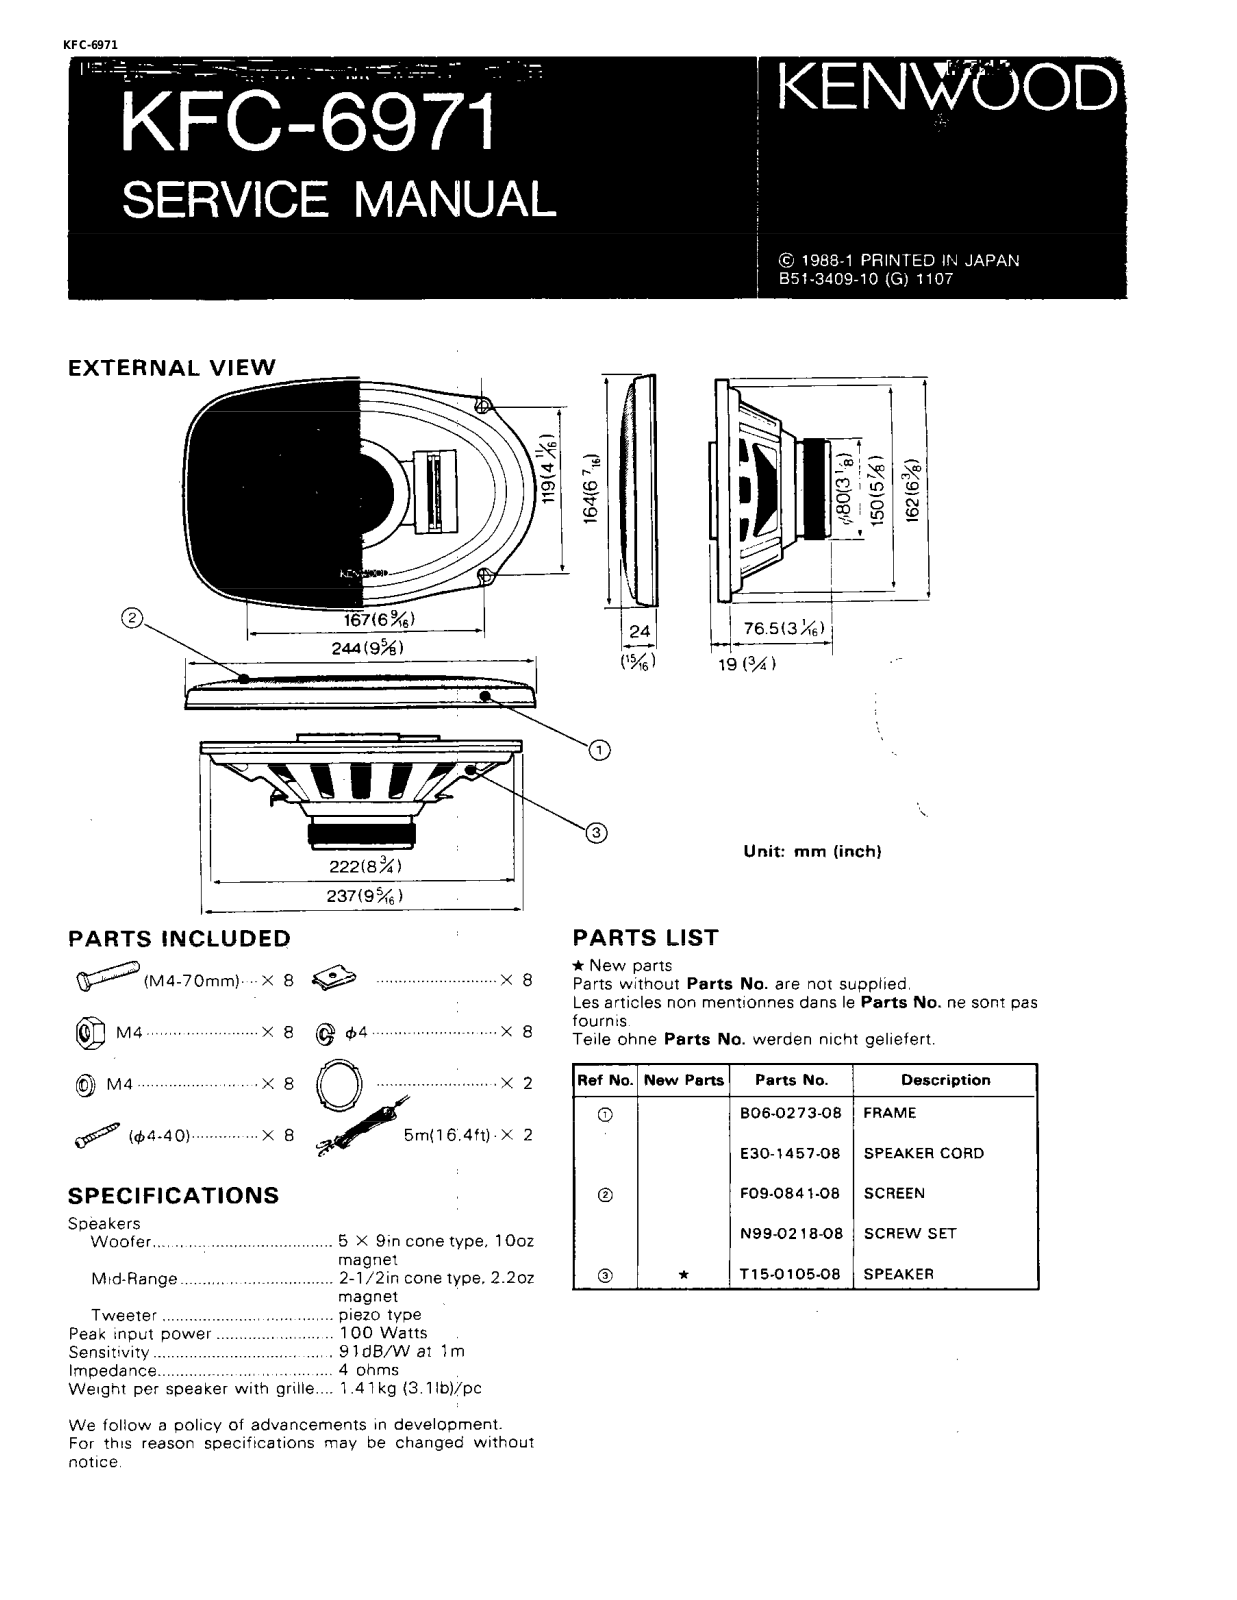 Kenwood KFC-6971 Service Manual